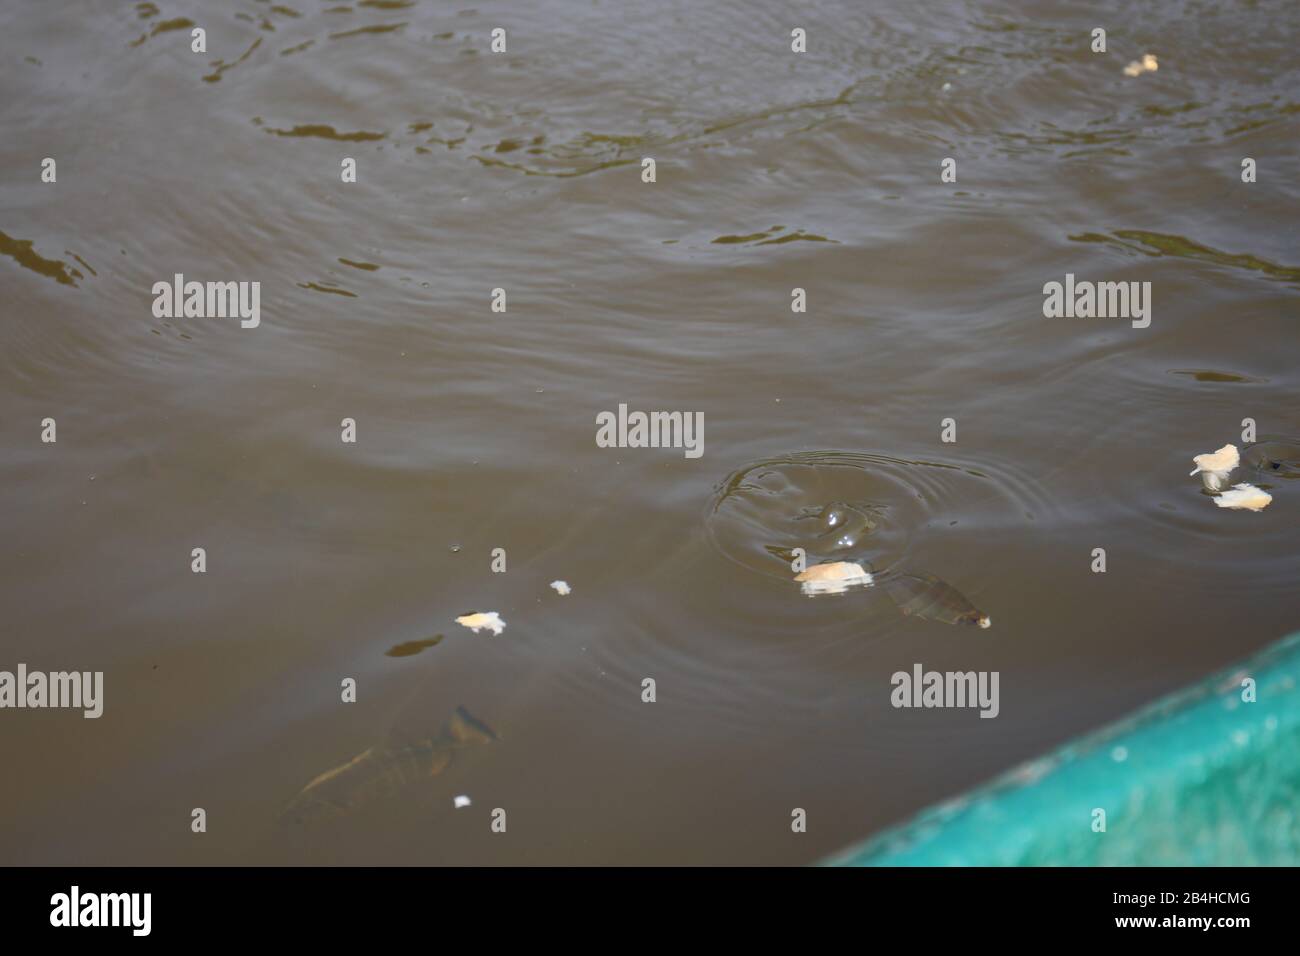 Piranhas eating bread in a murky oxbow lake in Tambopata, Madre de Dios, Peru Stock Photo